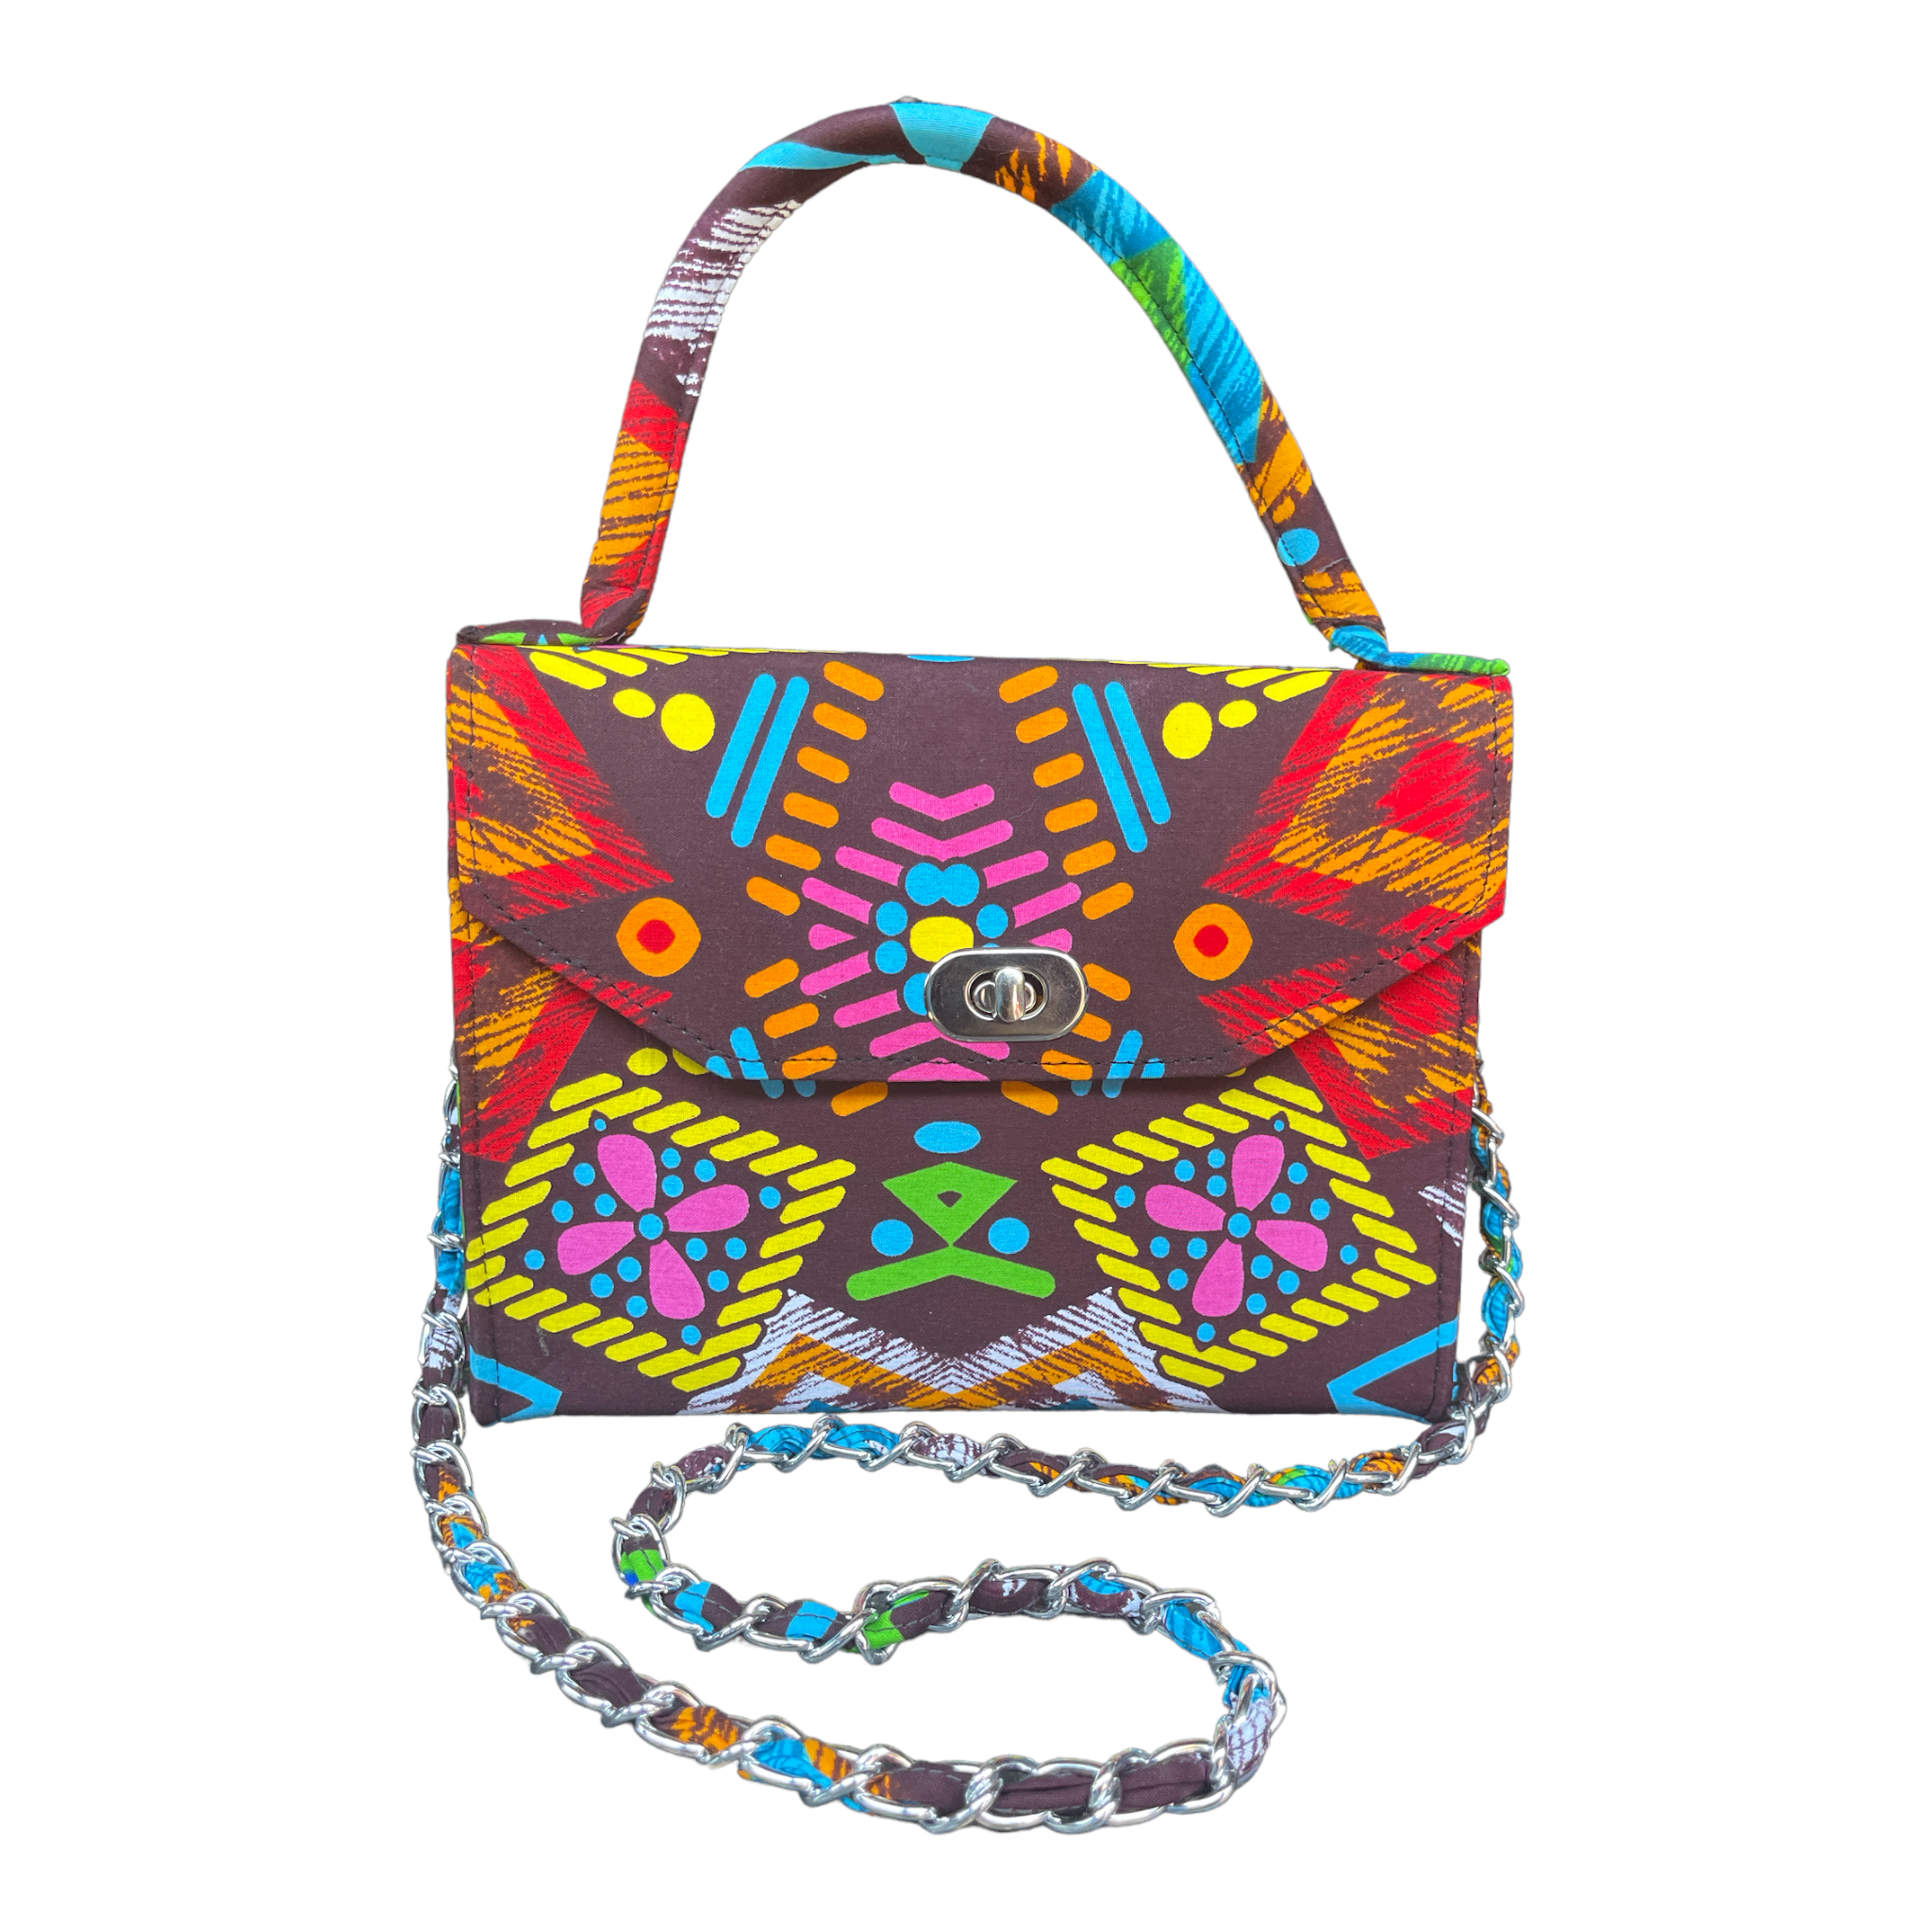 Clutch bag - African print (Hippie)